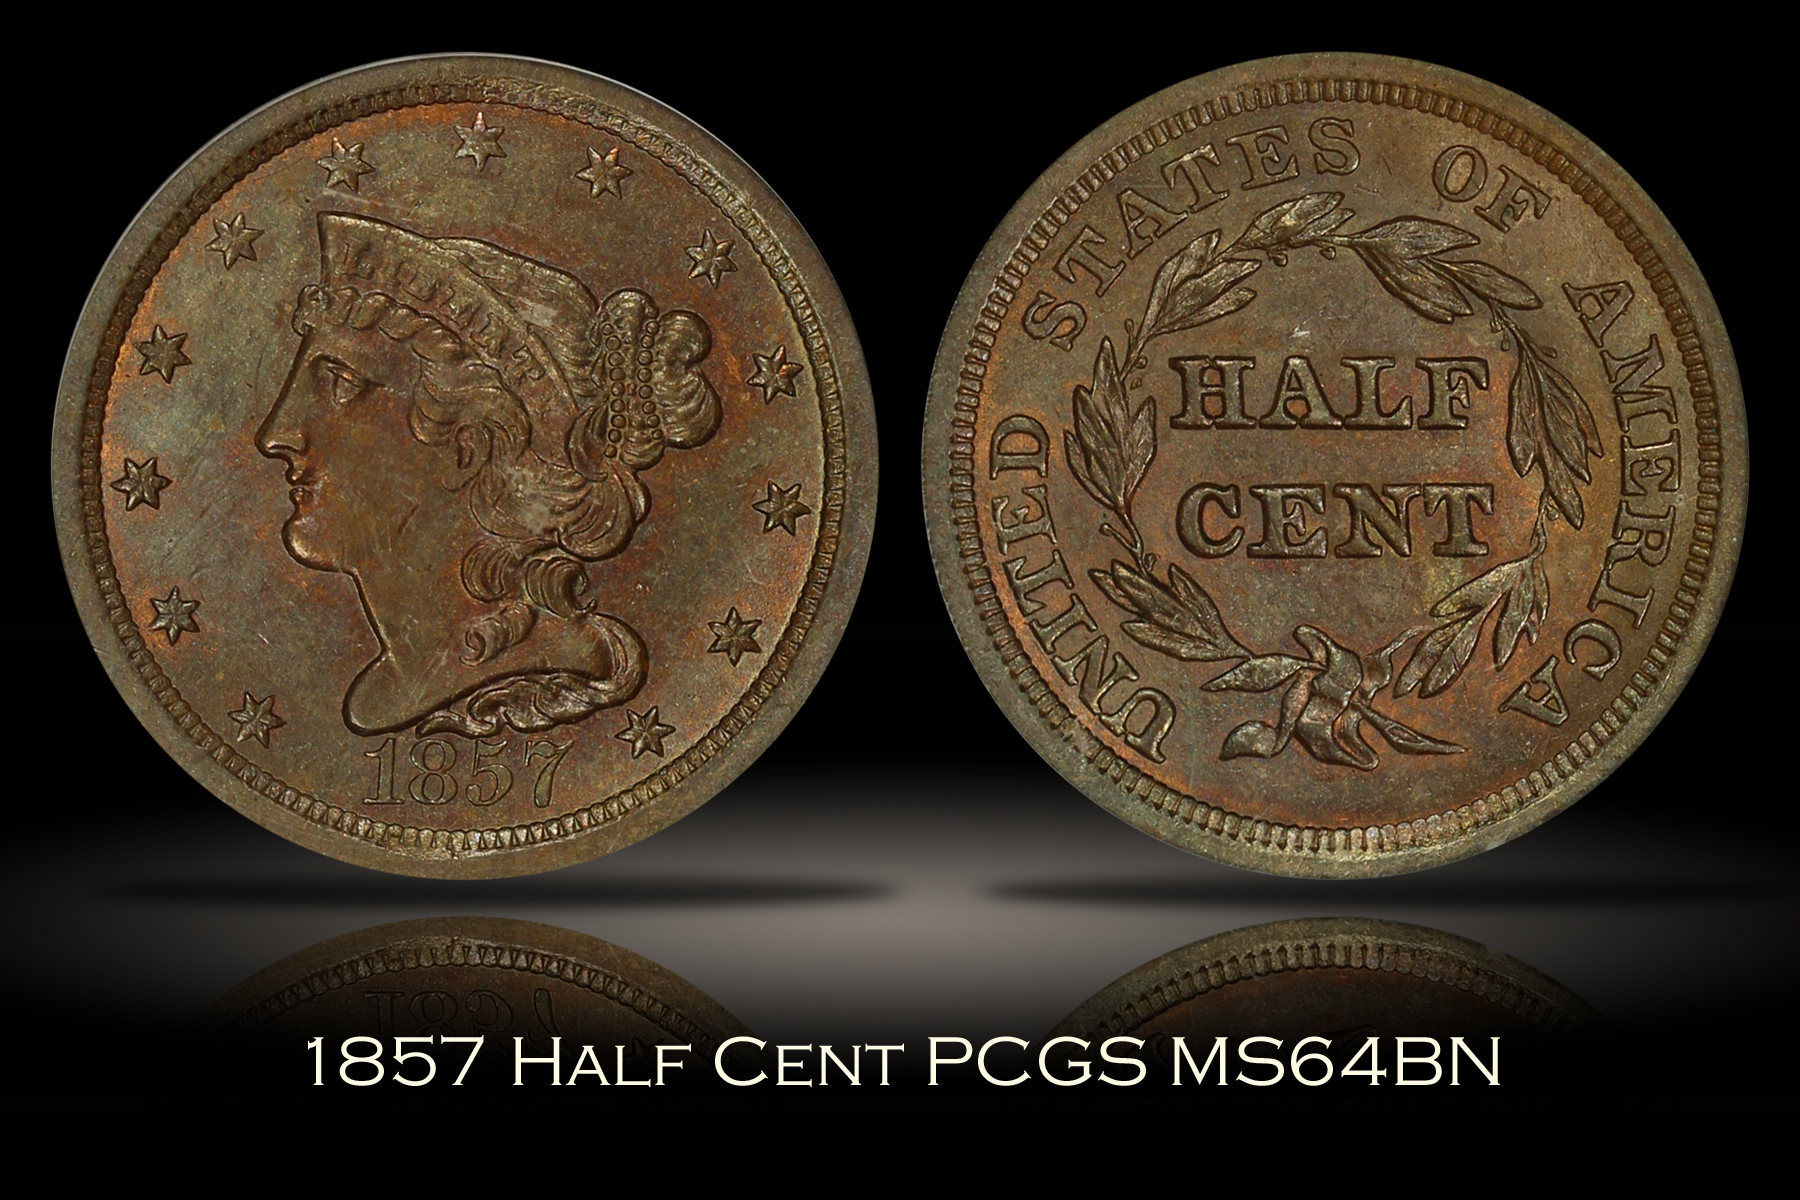 1857 Half Cent PCGS MS64BN